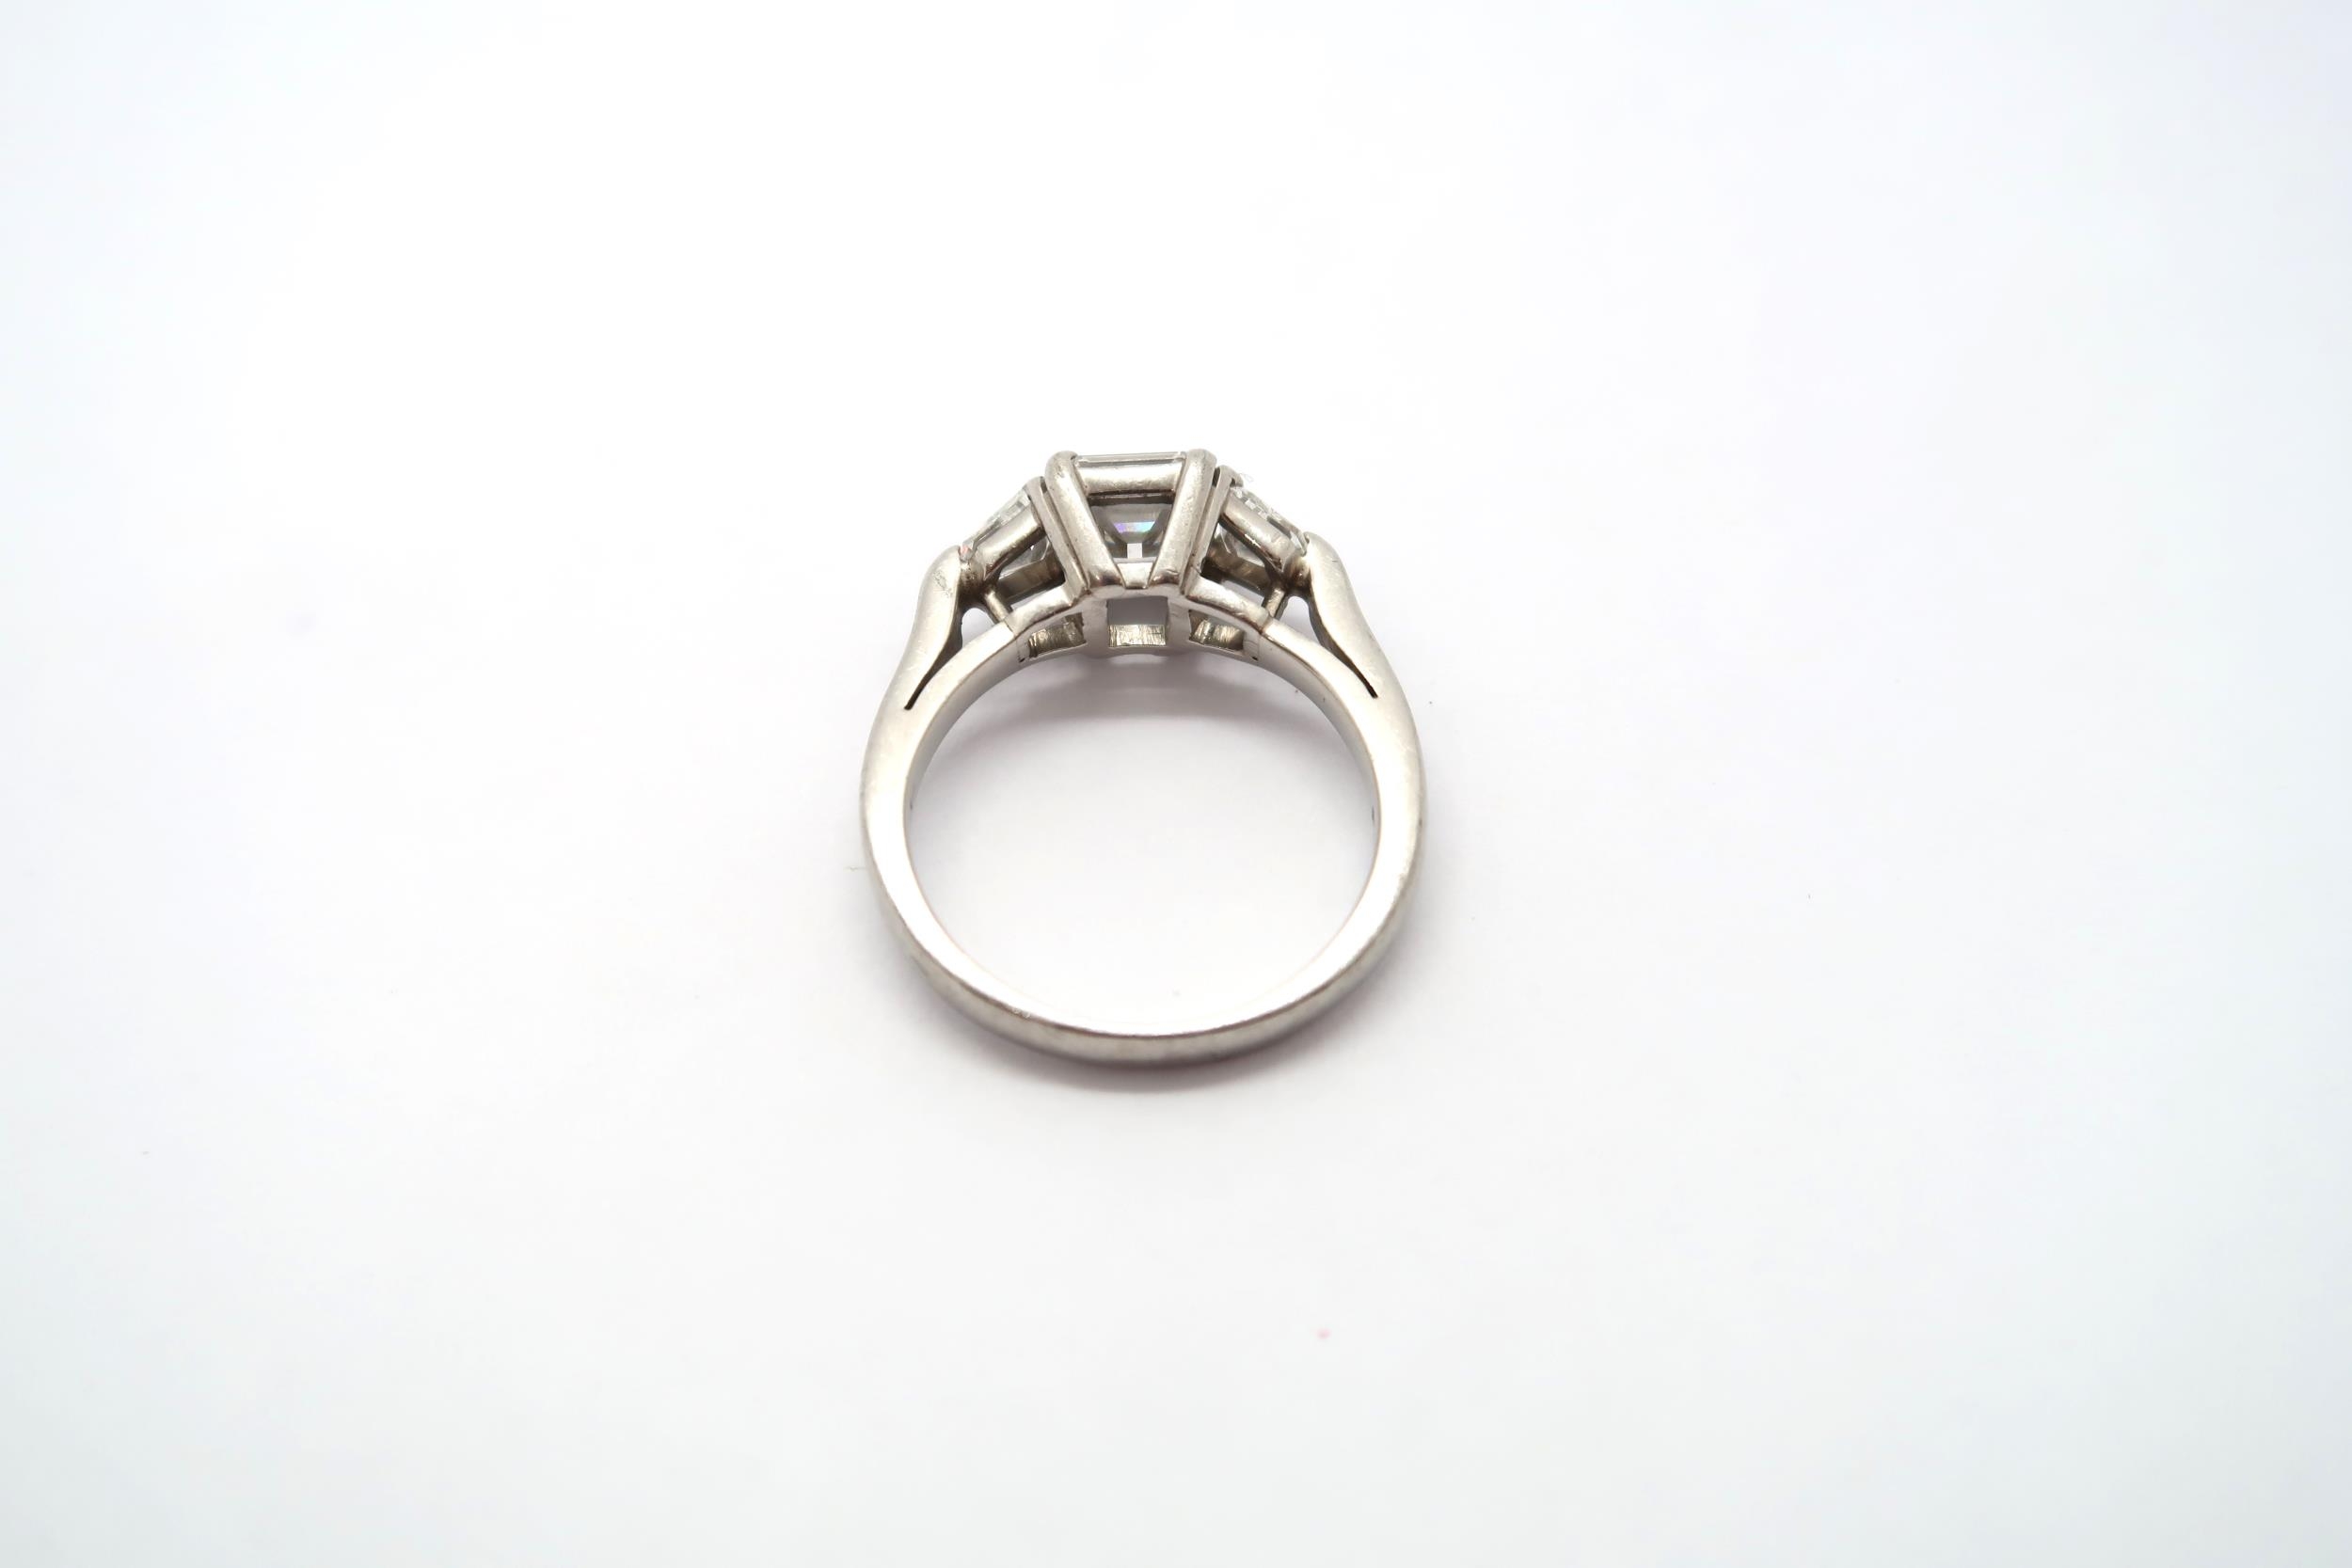 A very good platinum three stone diamond ring - The square emerald cut diamond estimated 1.1ct - Image 10 of 11